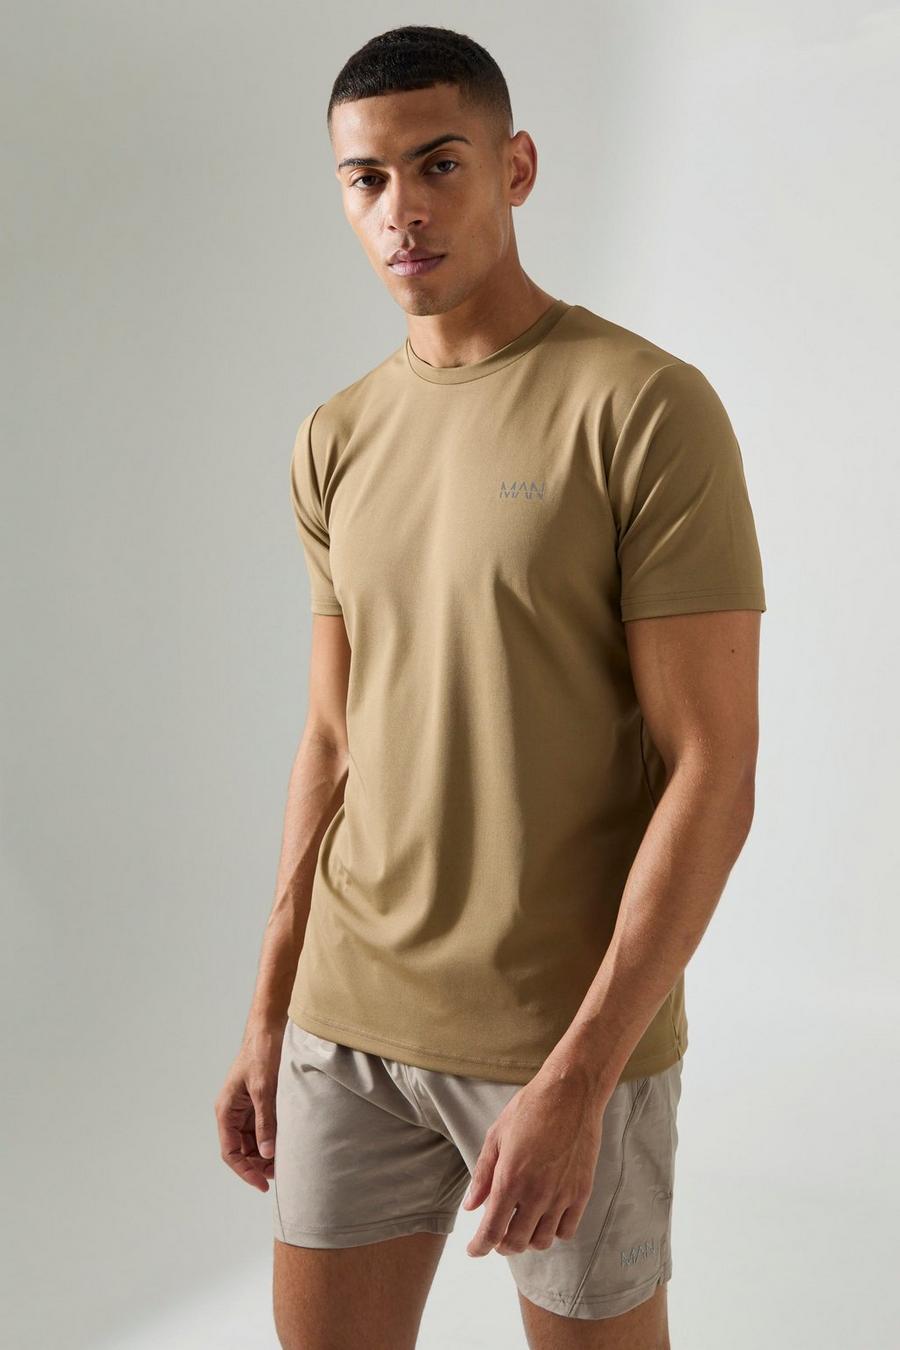 Man Active Performance Sport T-Shirt, Khaki image number 1